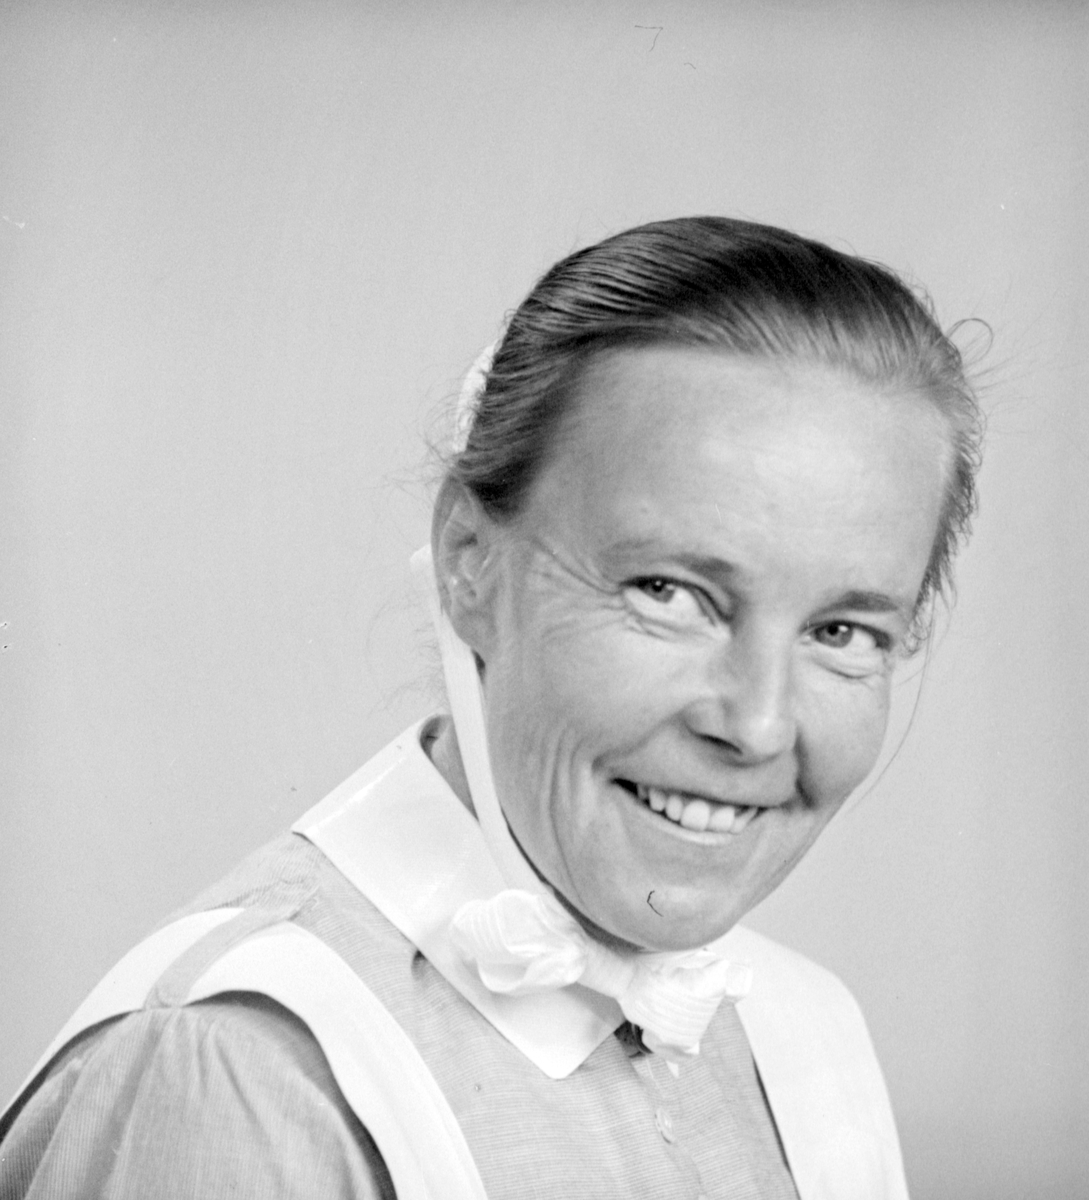 Syster Hilma Morelius, augusti 1944